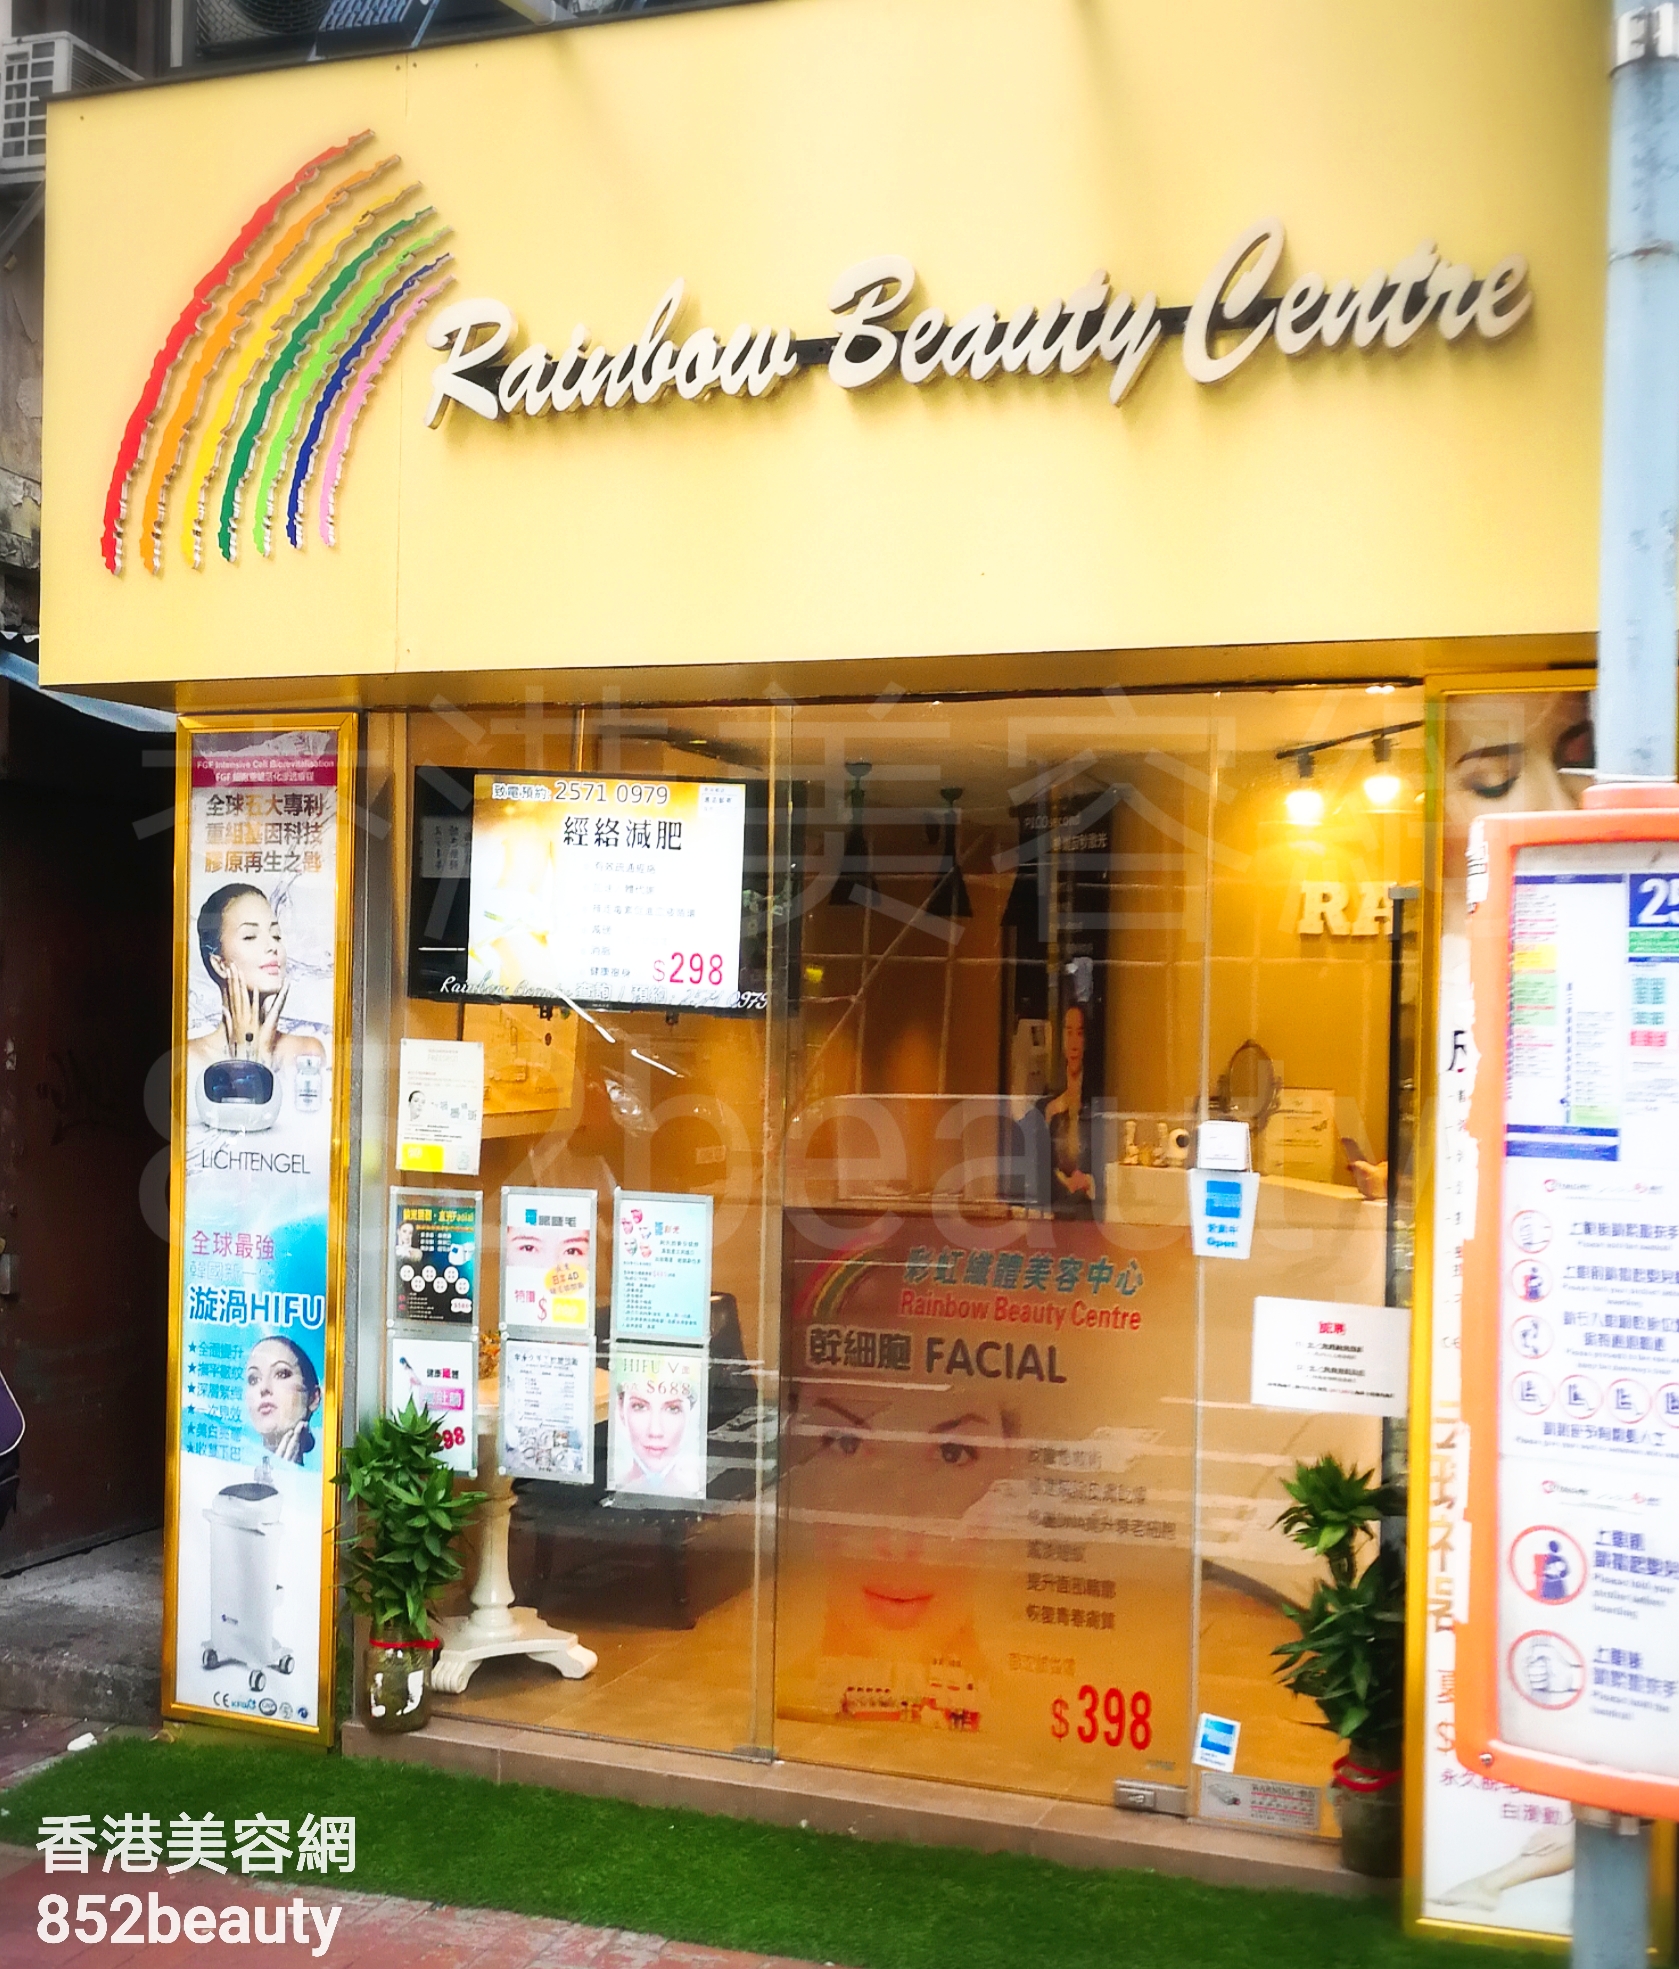 纖體瘦身: Rainbow Beauty Centre